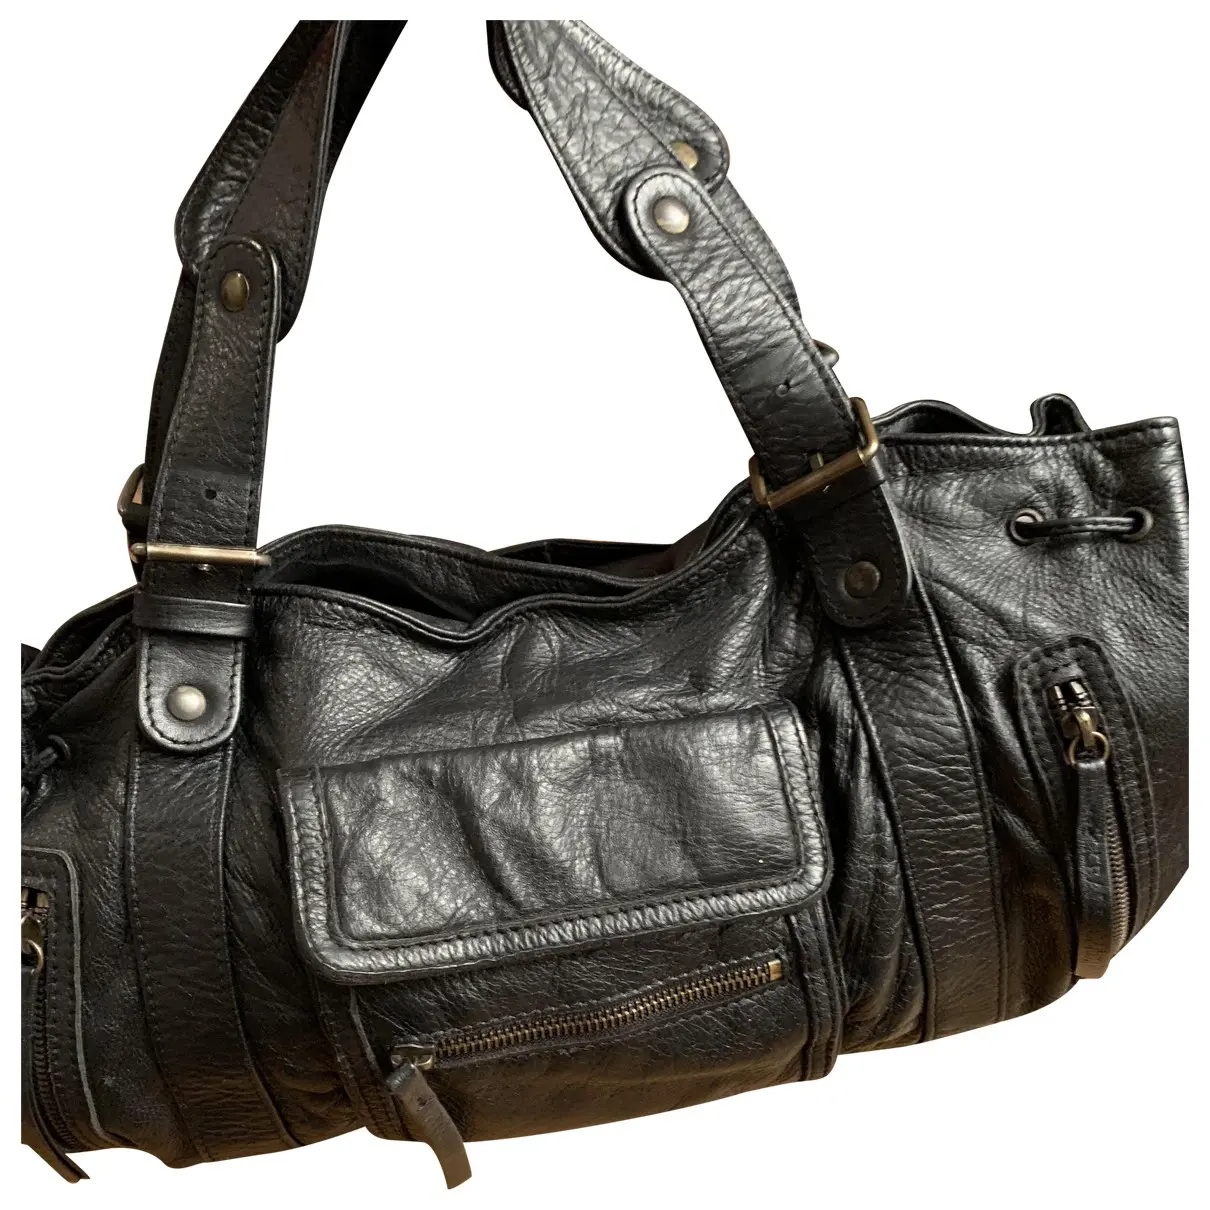 24h leather handbag Gerard Darel